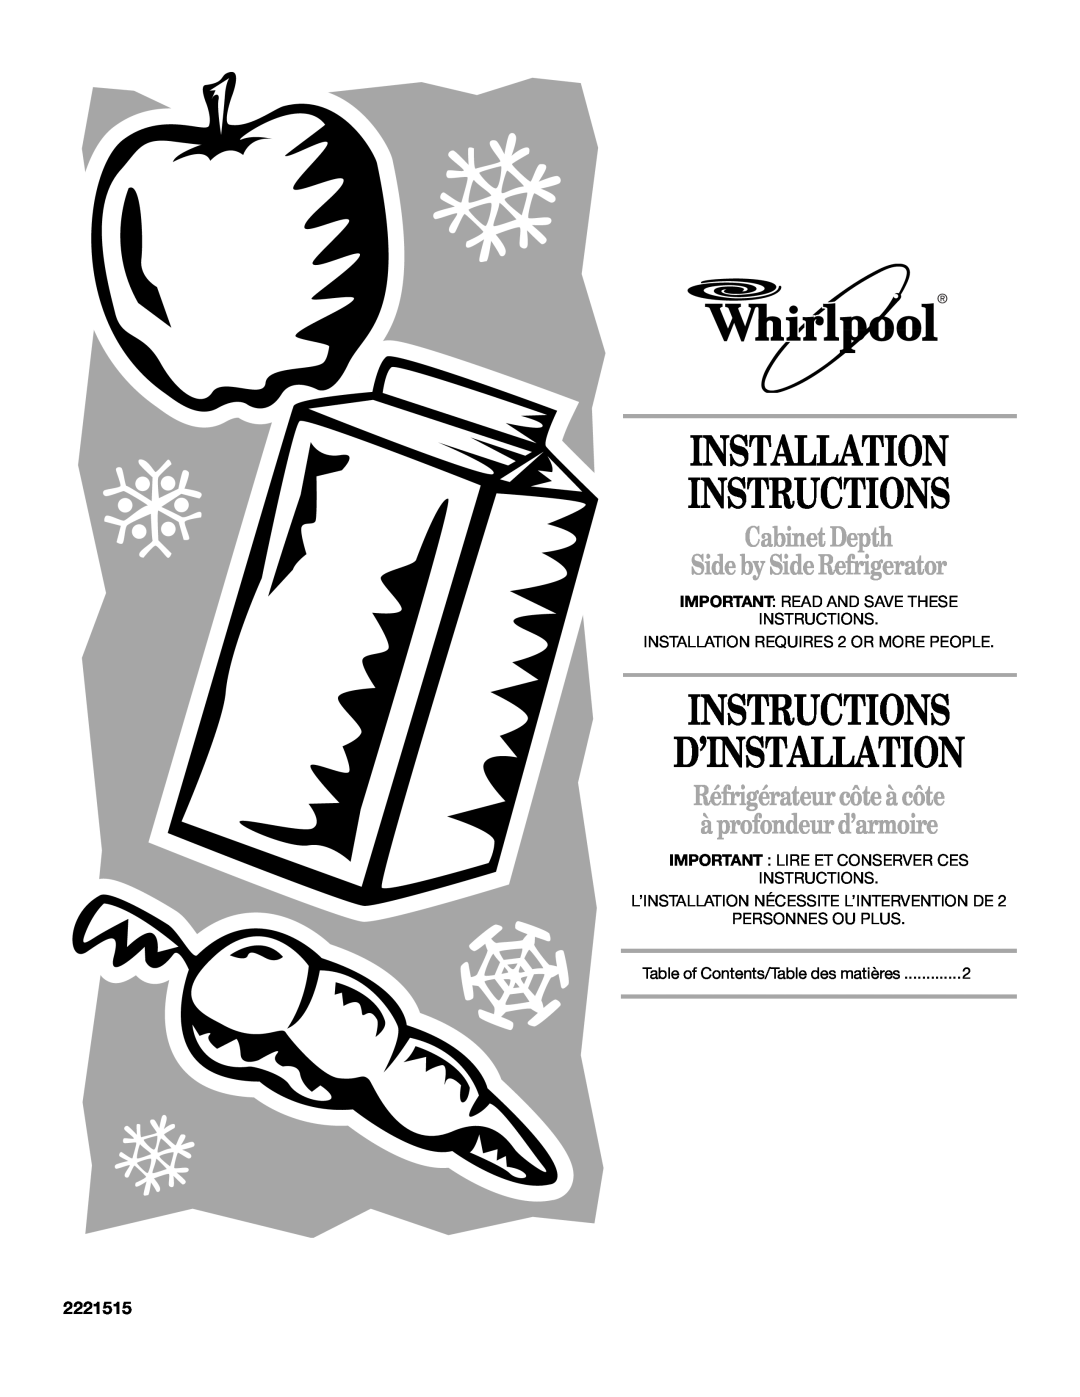 Whirlpool 2221515 installation instructions Installation Instructions, Instructions D’Installation 